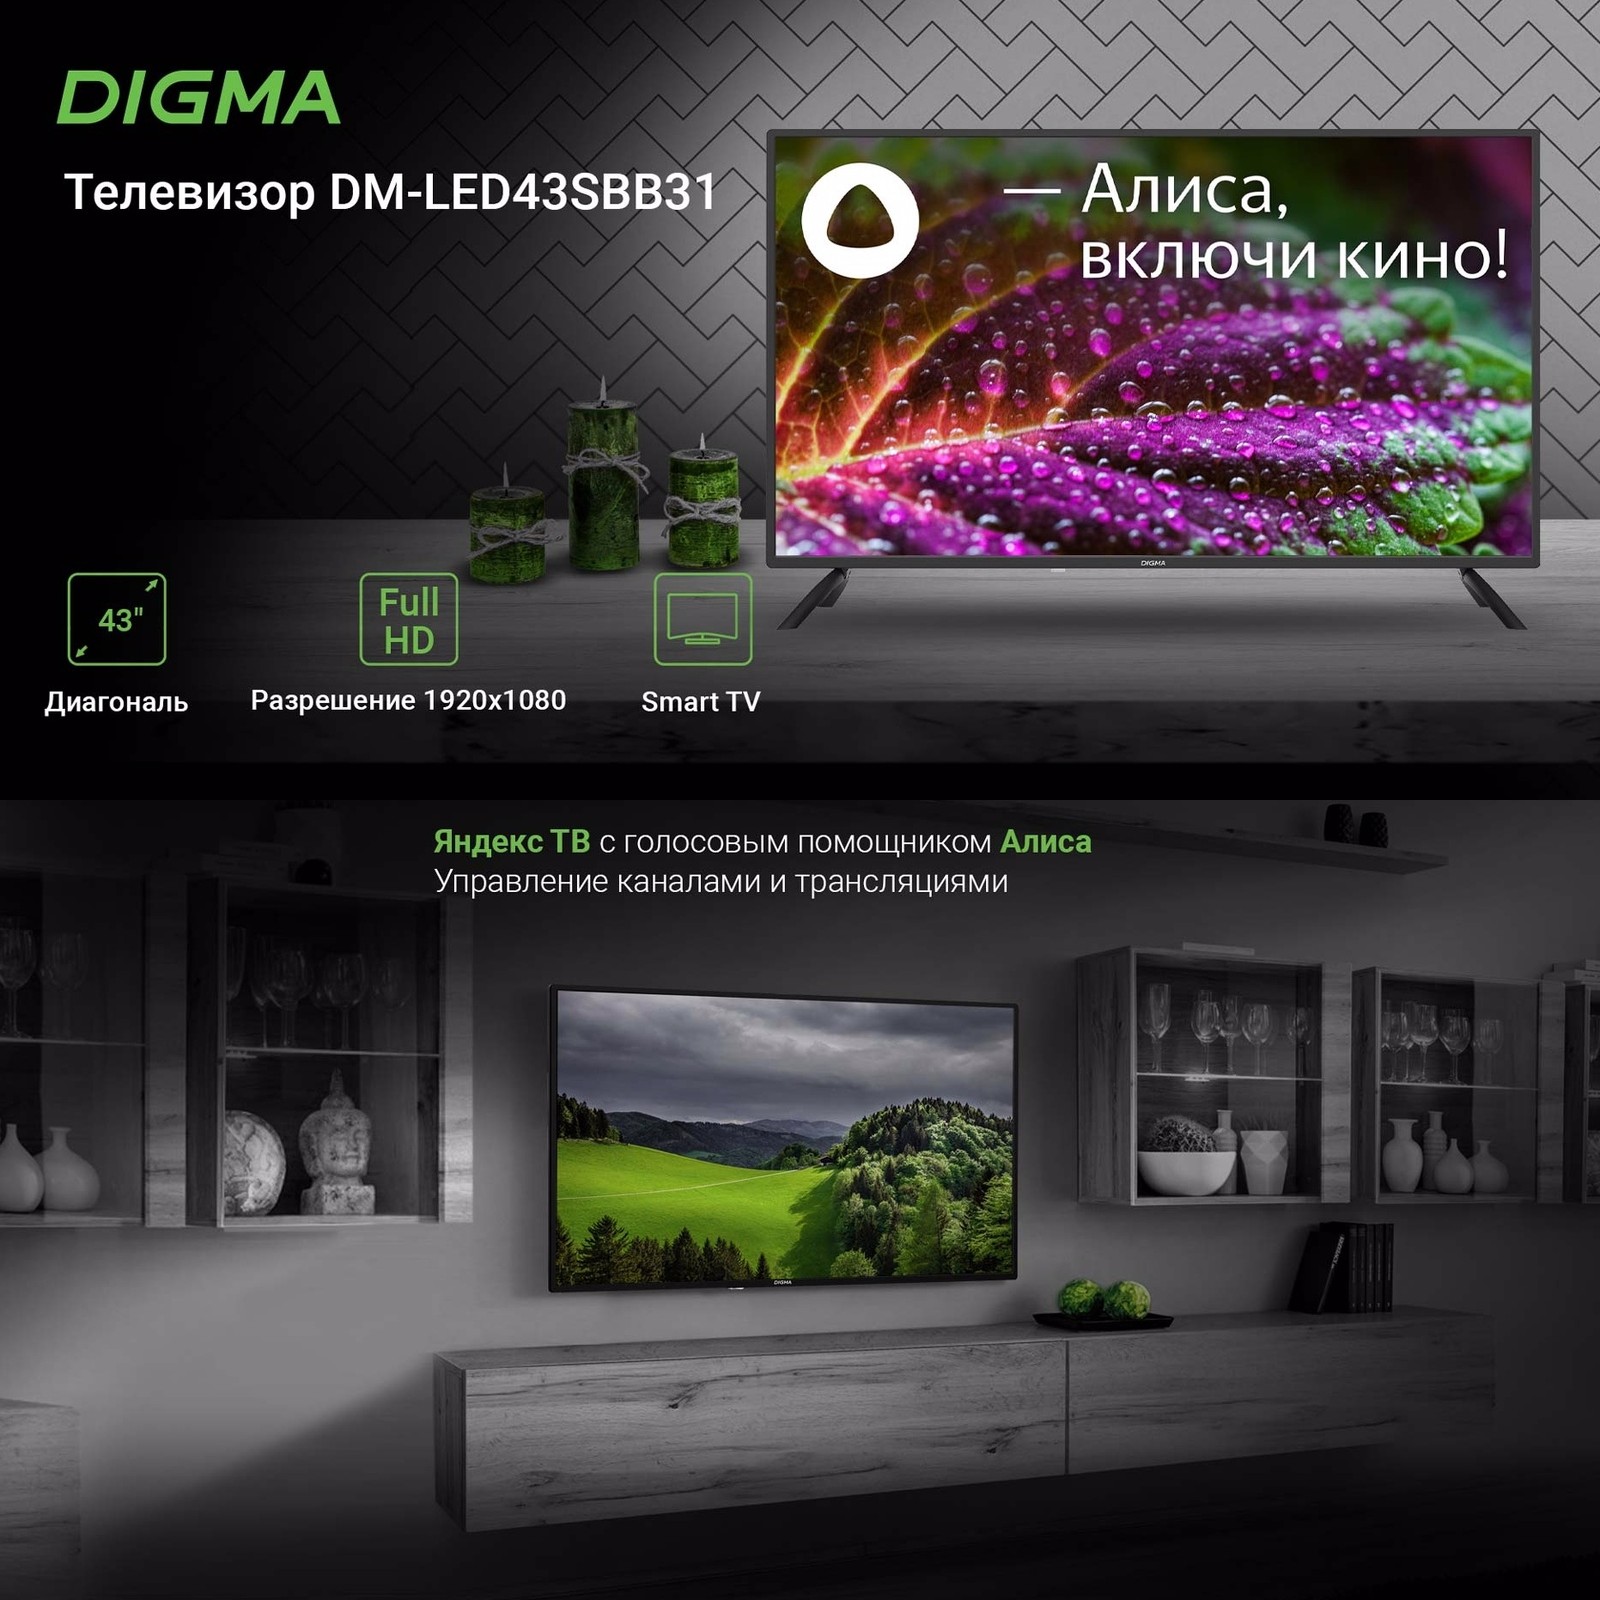 Телевизор Digma DM-LED43SBB31. Яндекс ТВ с голосовым помощником Алиса